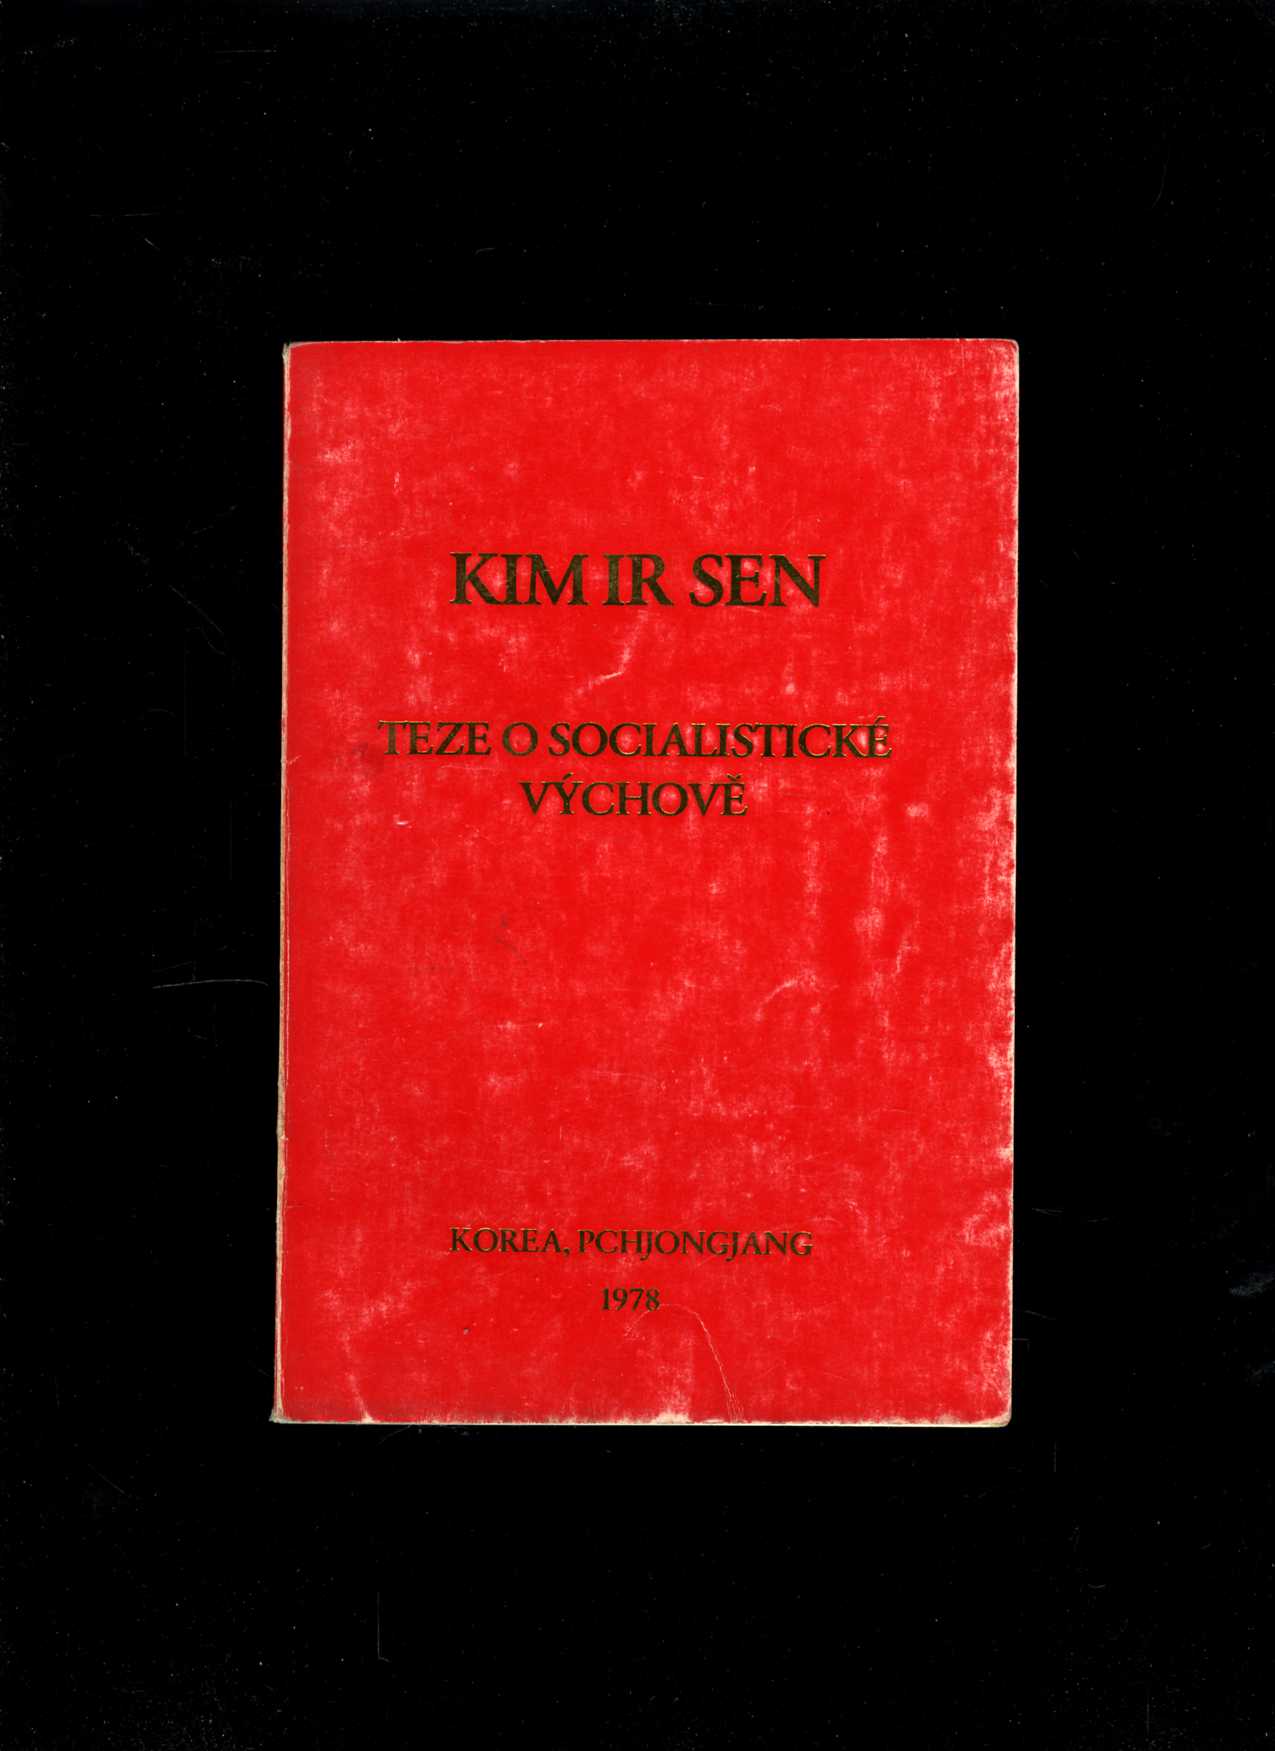 Teze o socialistické výchově (Kim Ir Sen)